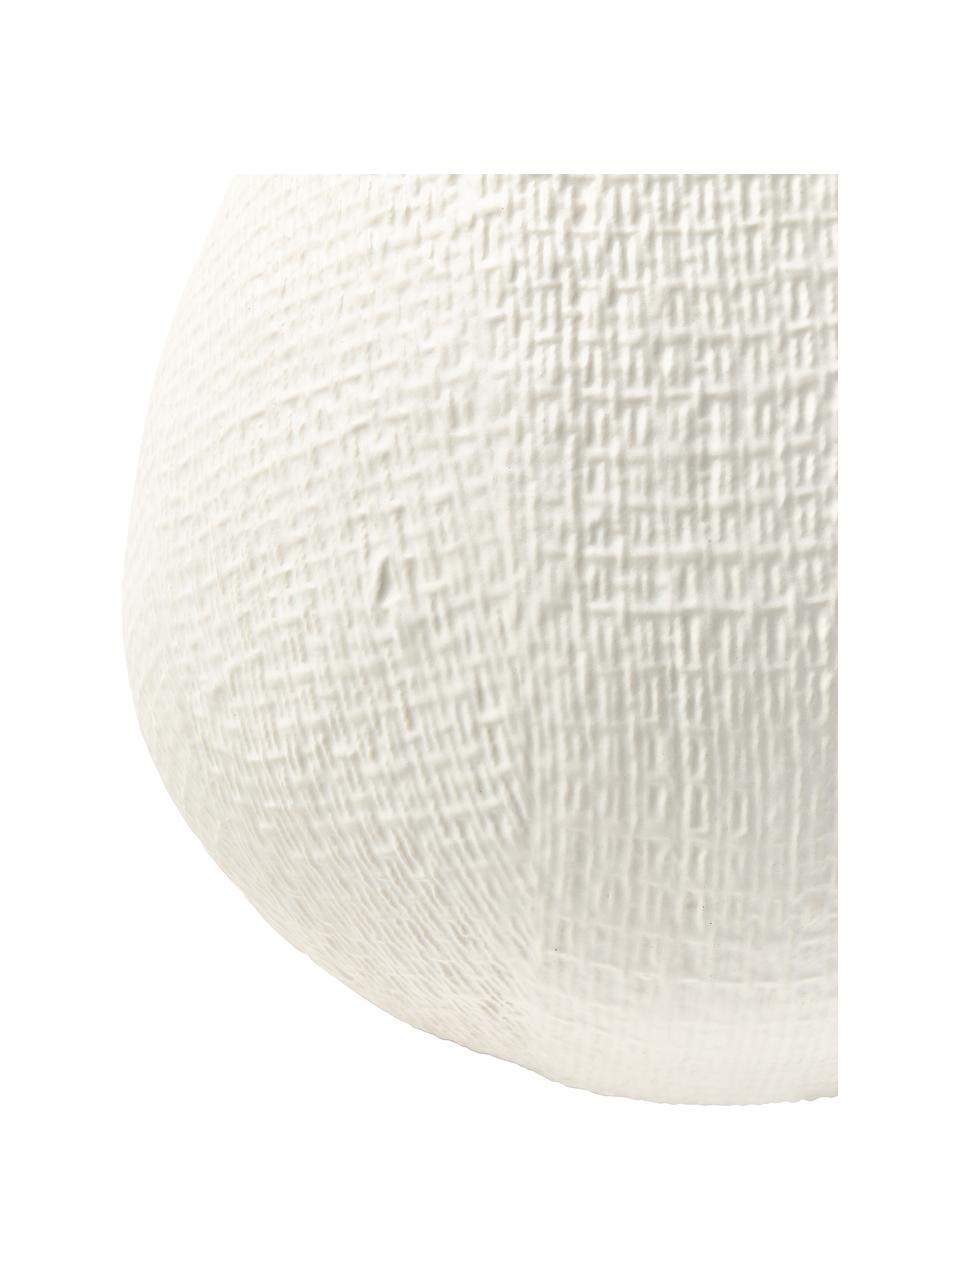 Große handgefertigte Keramik-Vase Wendy, Keramik, Weiß, Ø 23 x H 24 cm